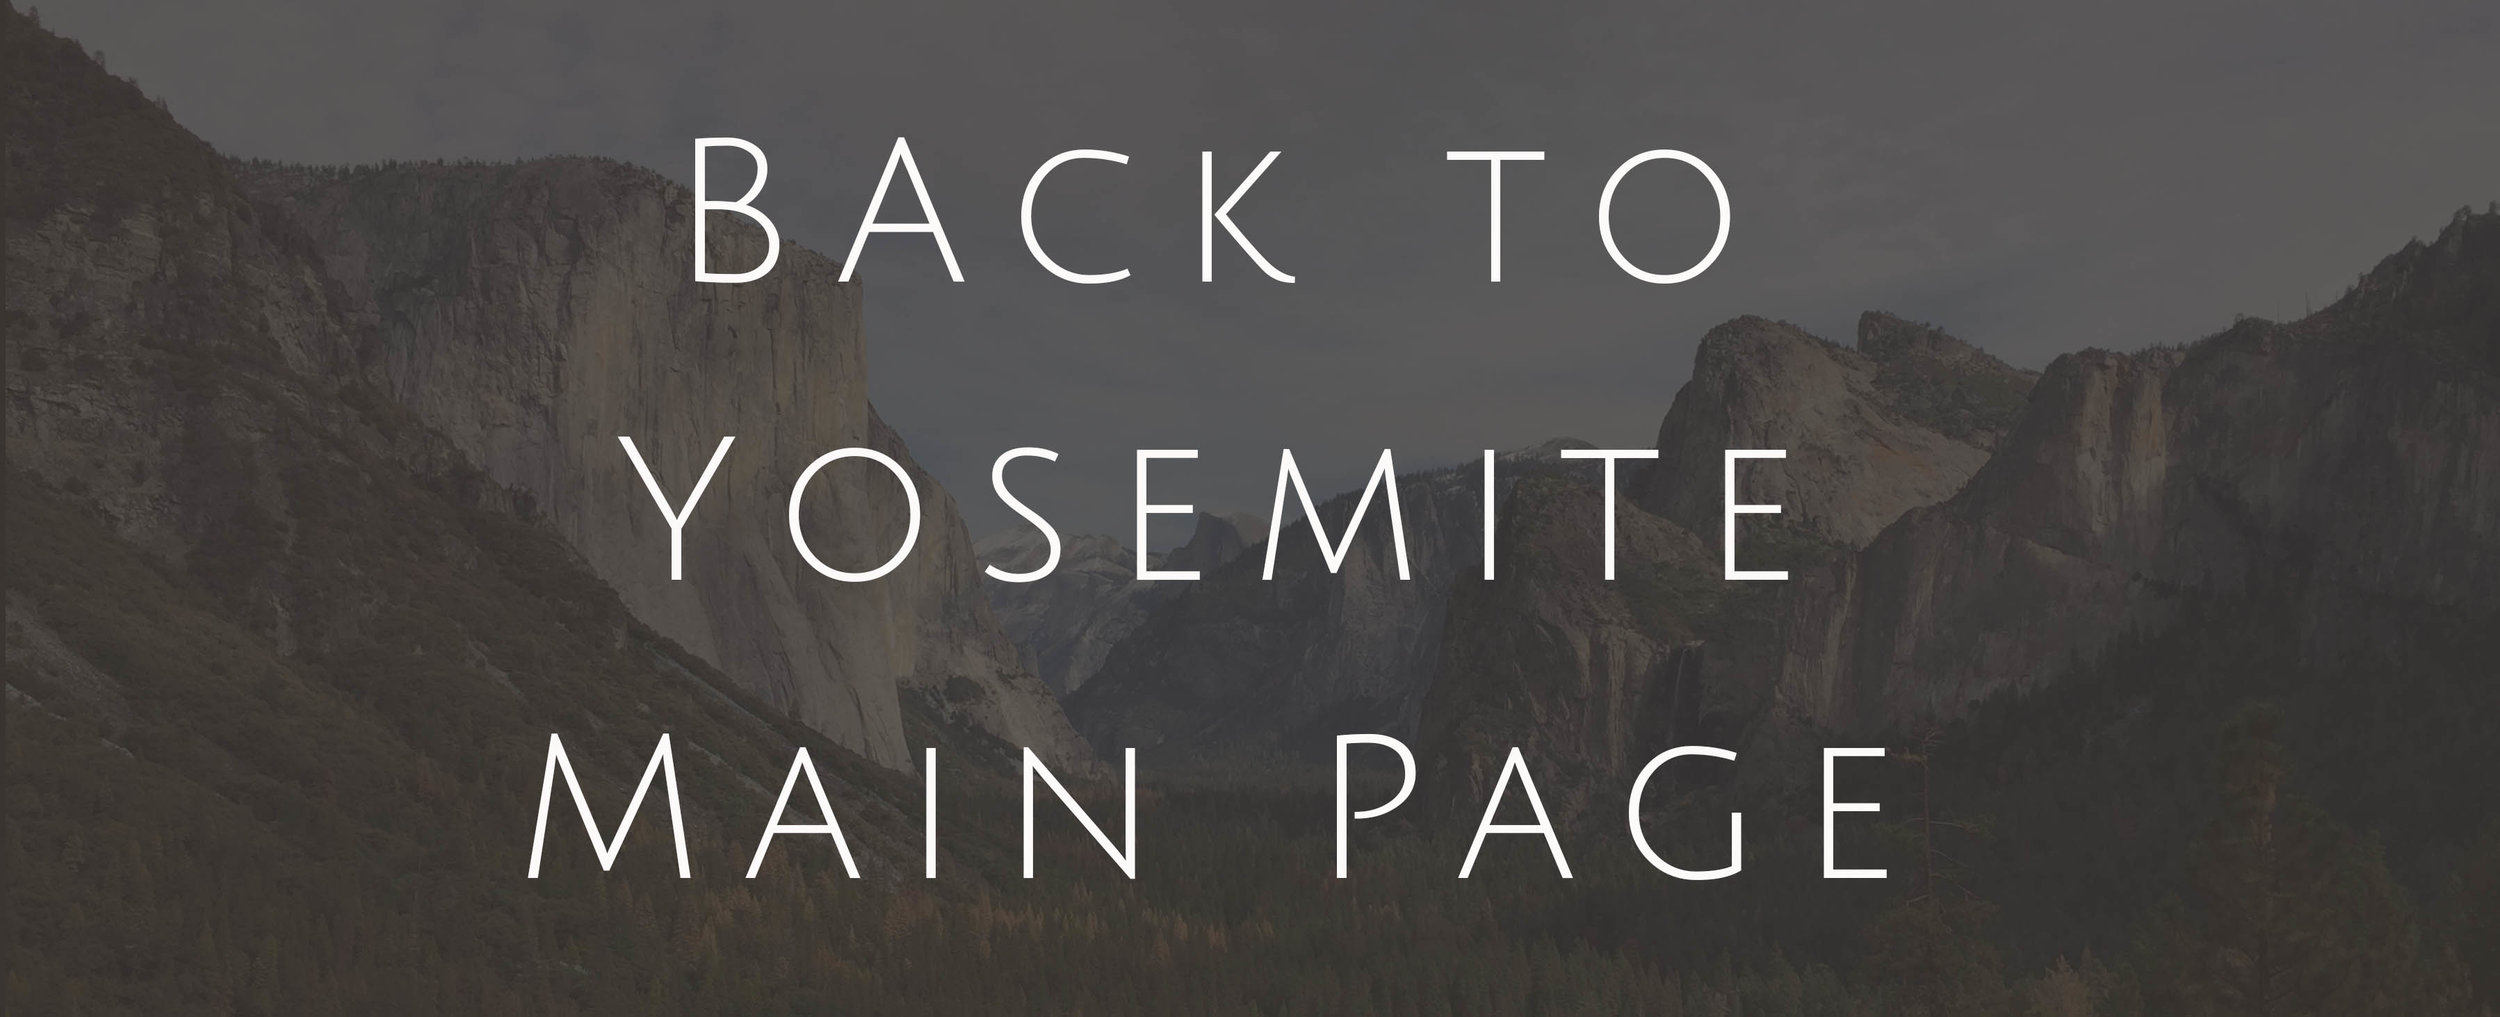 Back to Yosemite Main Page 2.jpg